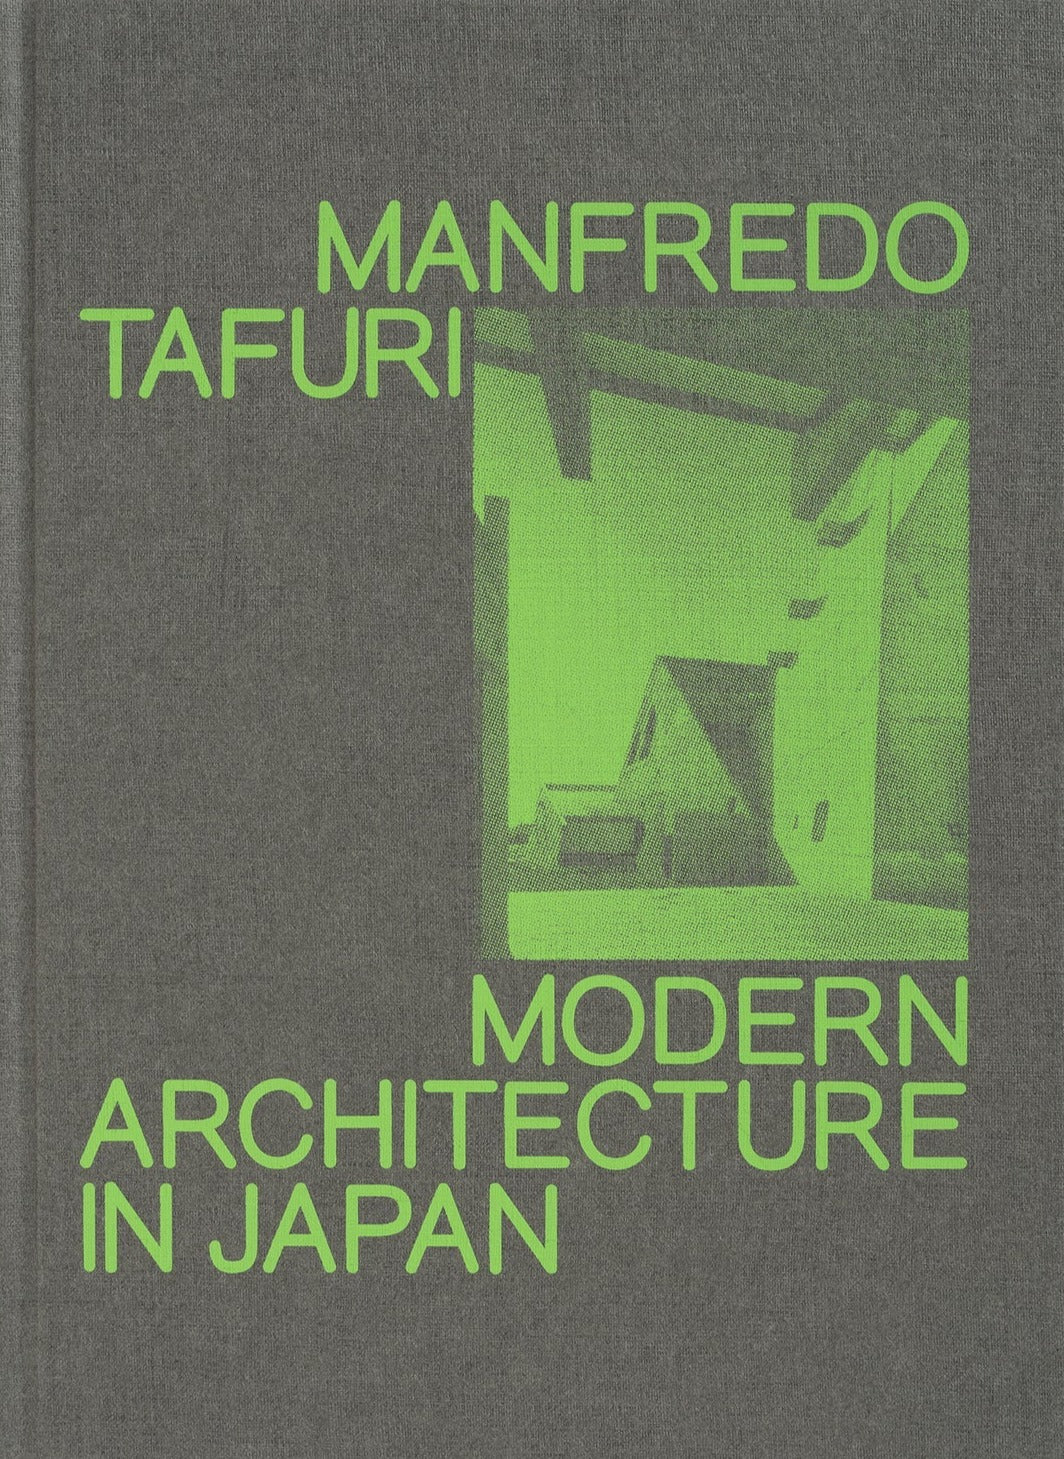 Modern Architecture in Japan - Tafuri_ModernArchitectureInJapan_Medium_1_1600x_39ccd5e9-b2bf-42cf-a21d-05015b83bf94